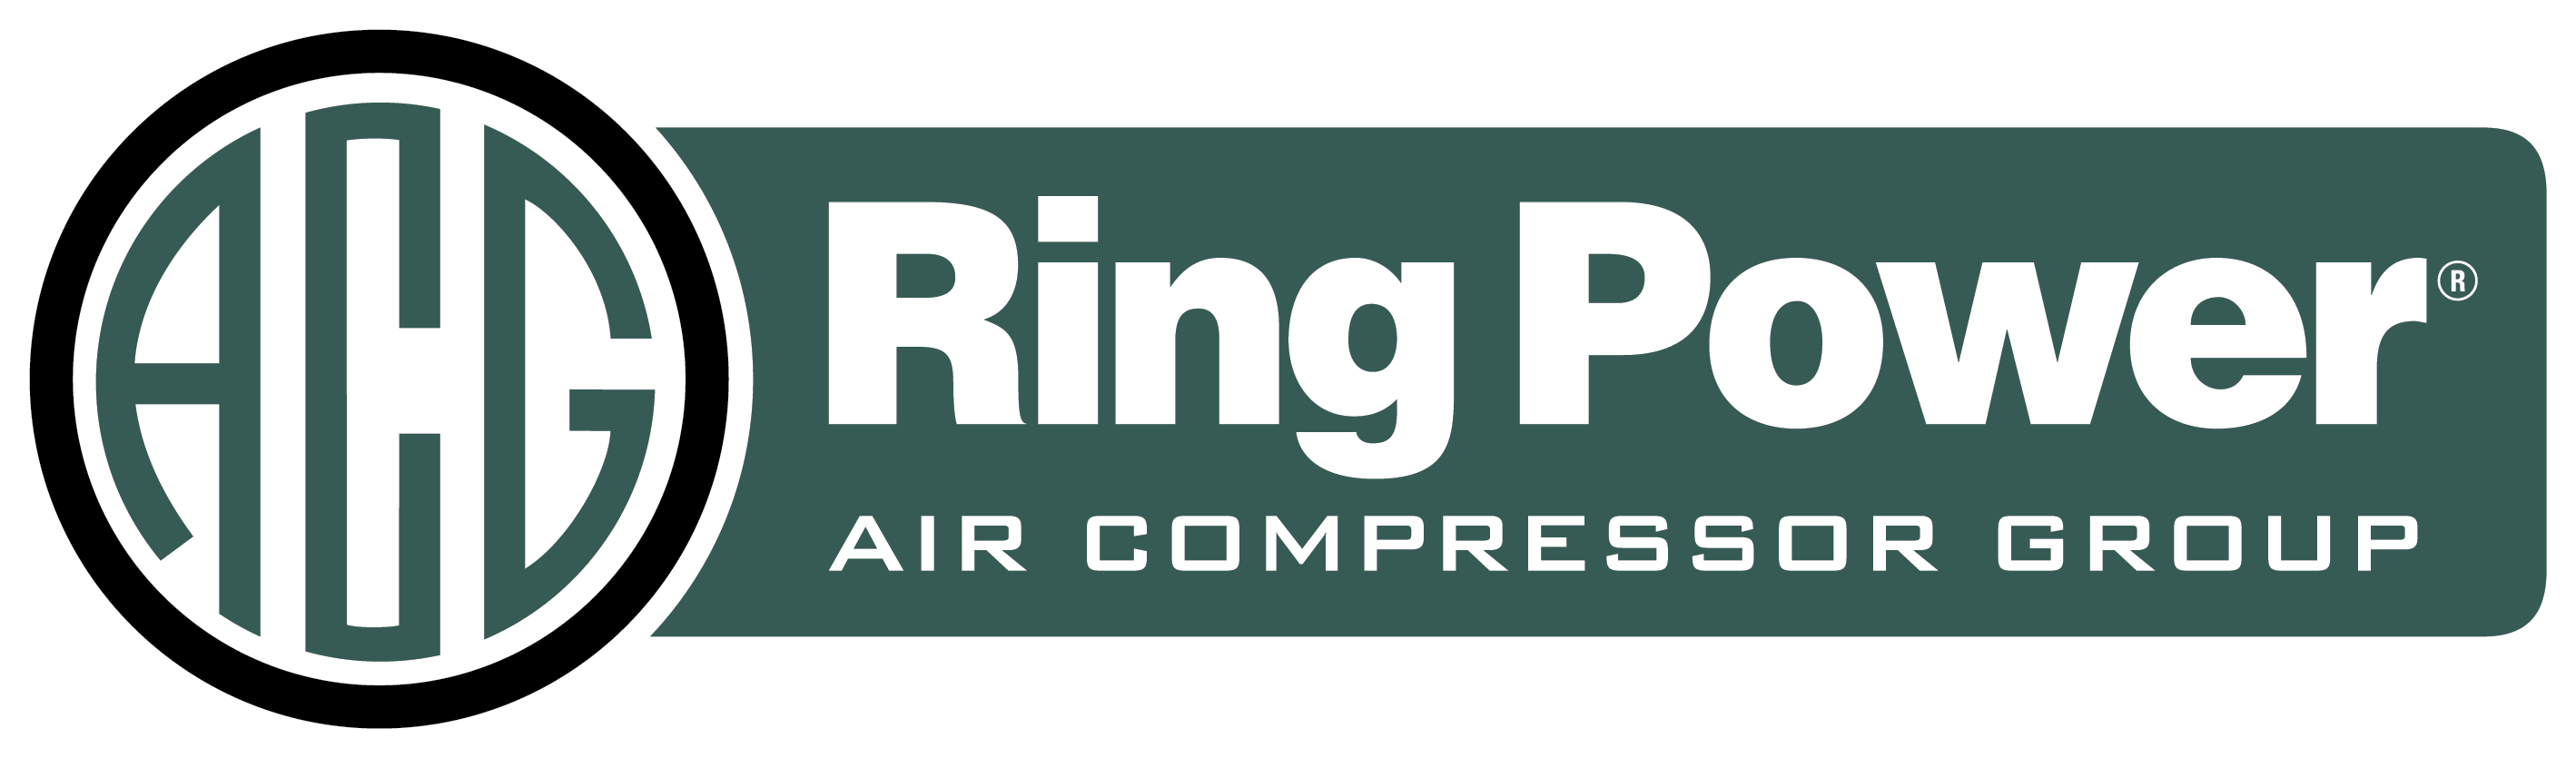 ring power acg logo main